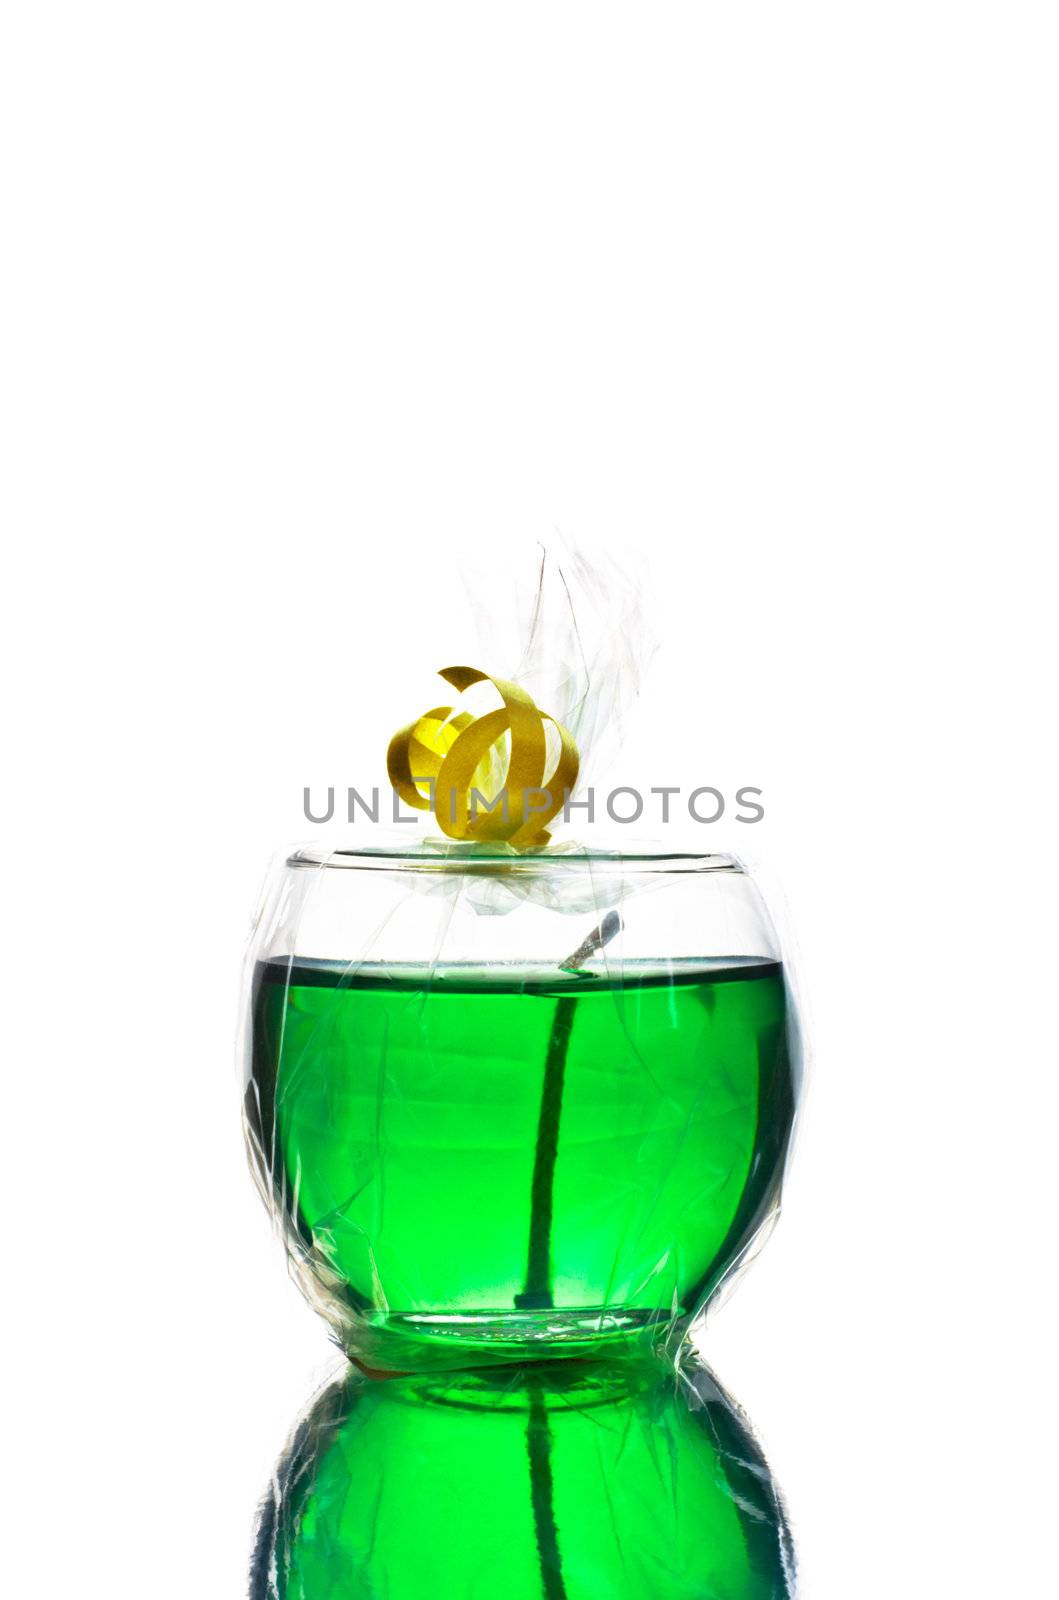 green gel candle by petr_malyshev